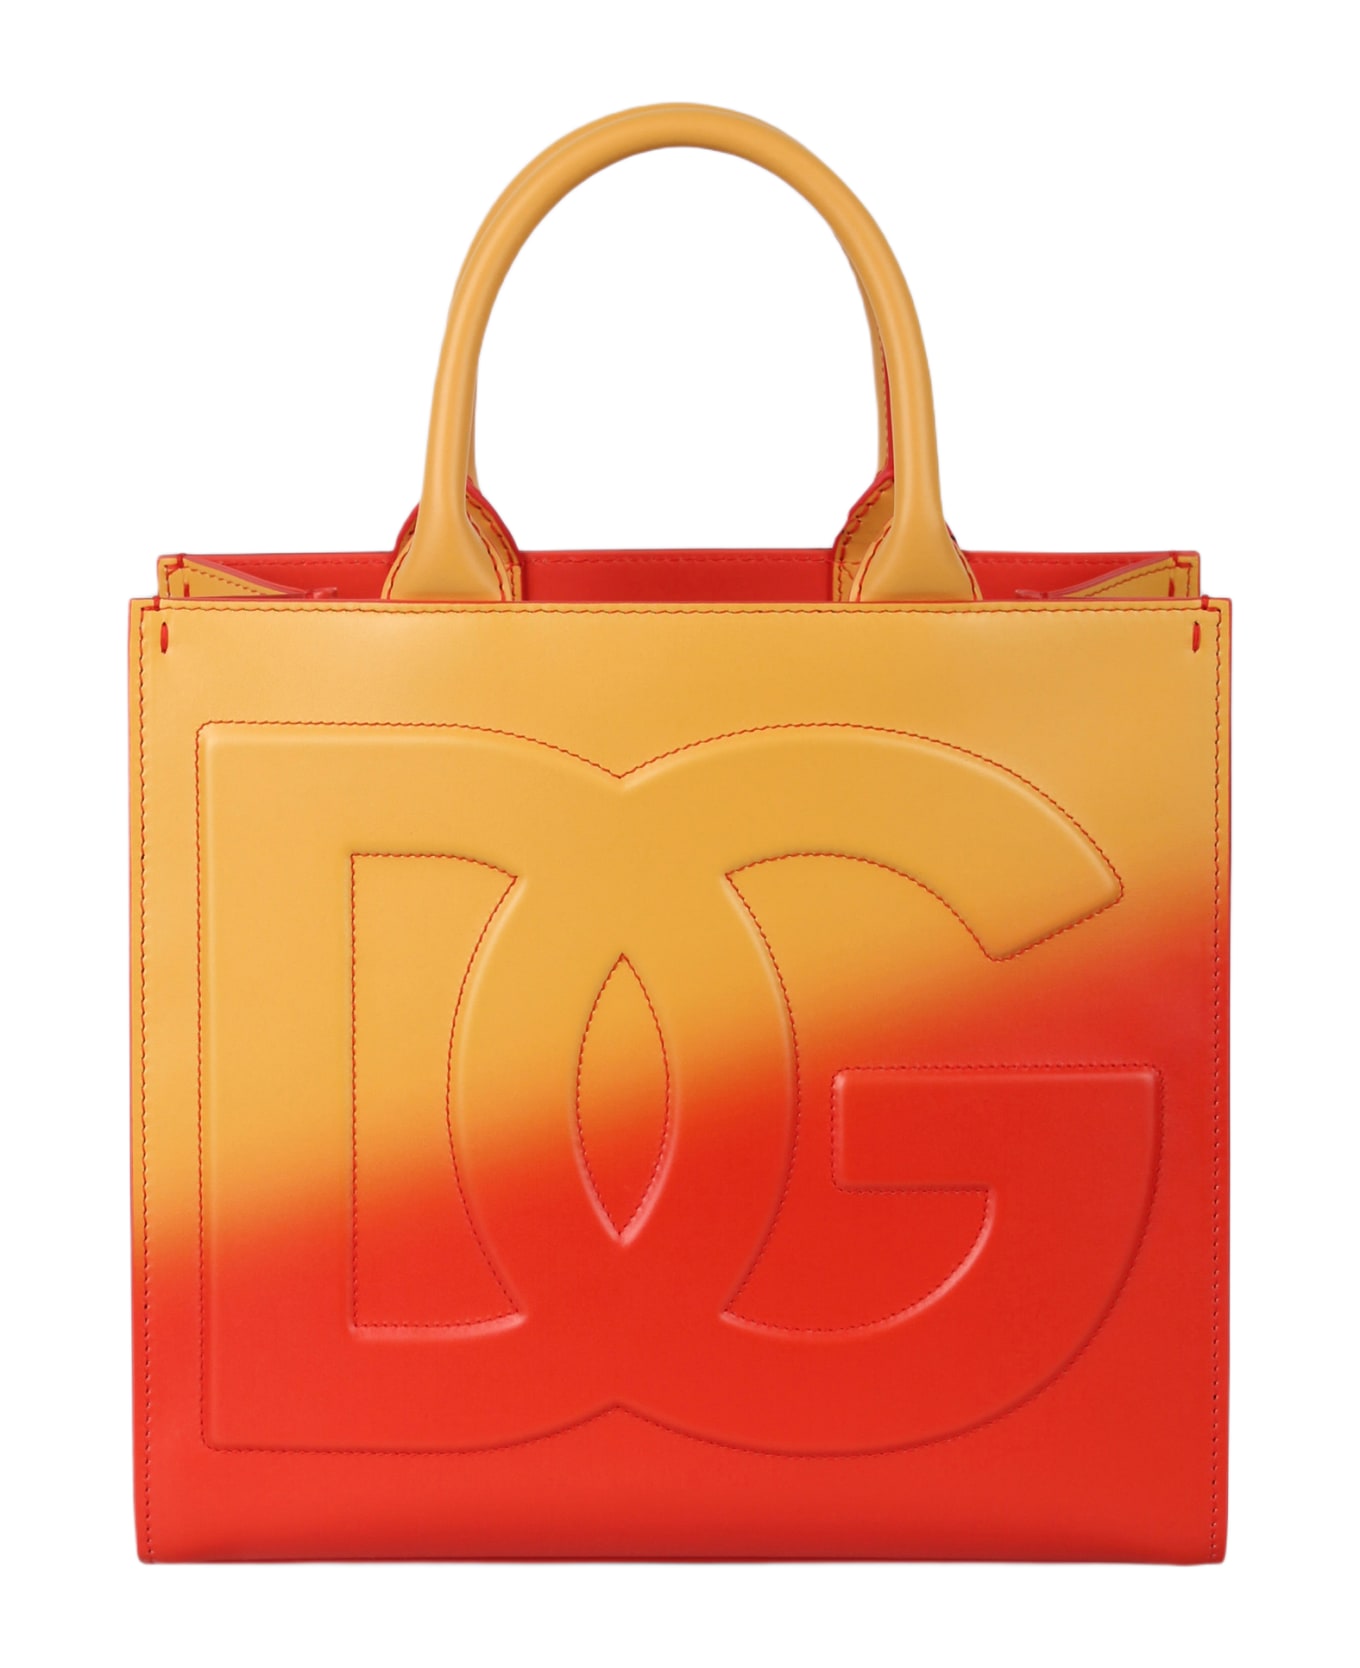 Dolce & Gabbana Medium Dg Daily Tote Bag